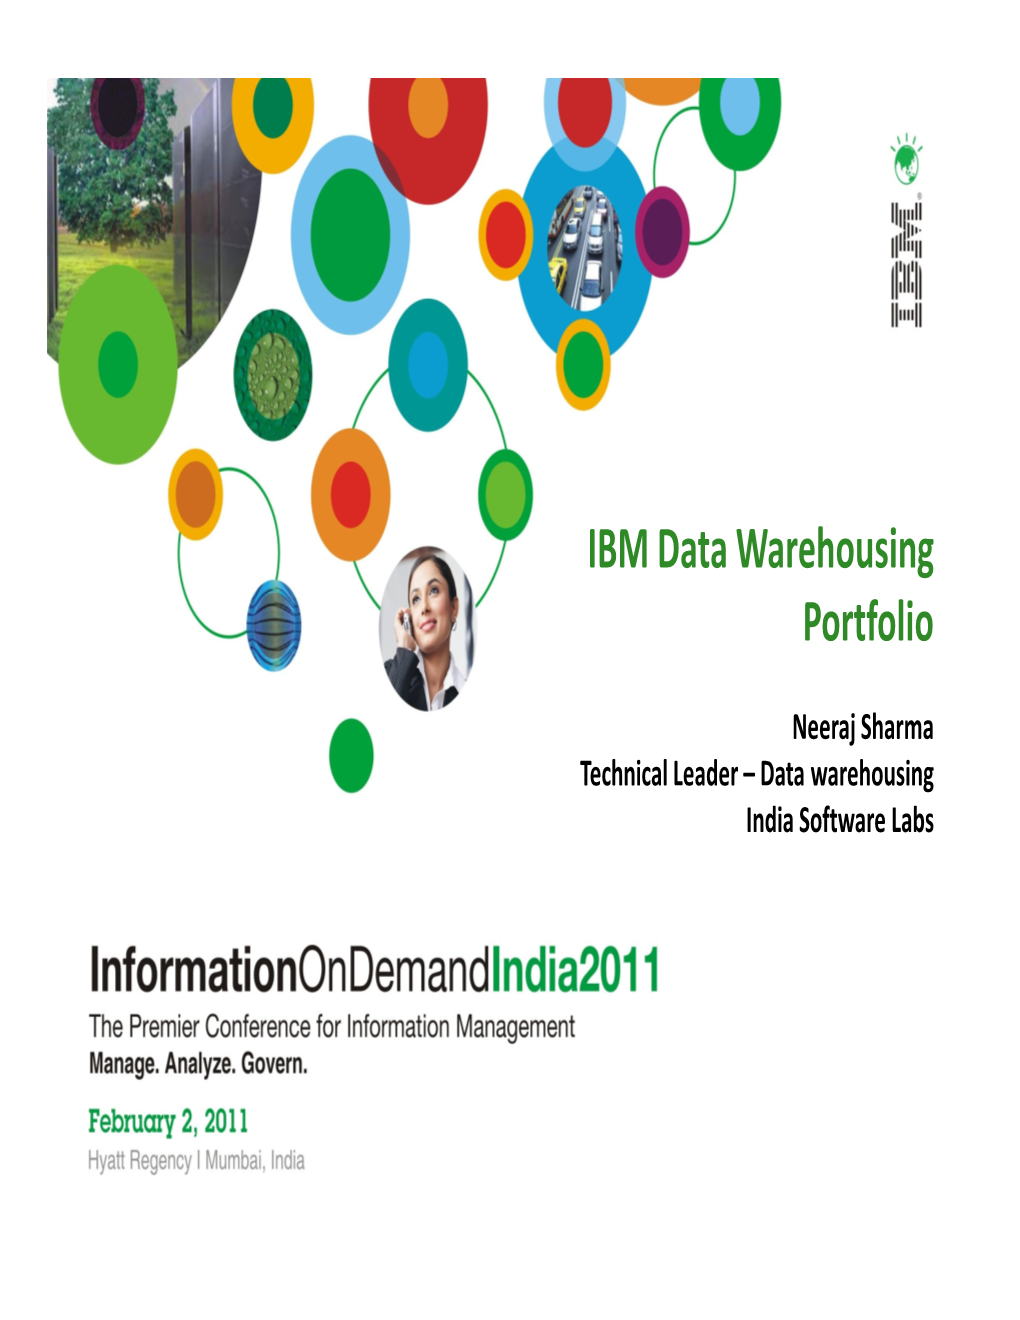 IBM Data Warehousing Portfolio